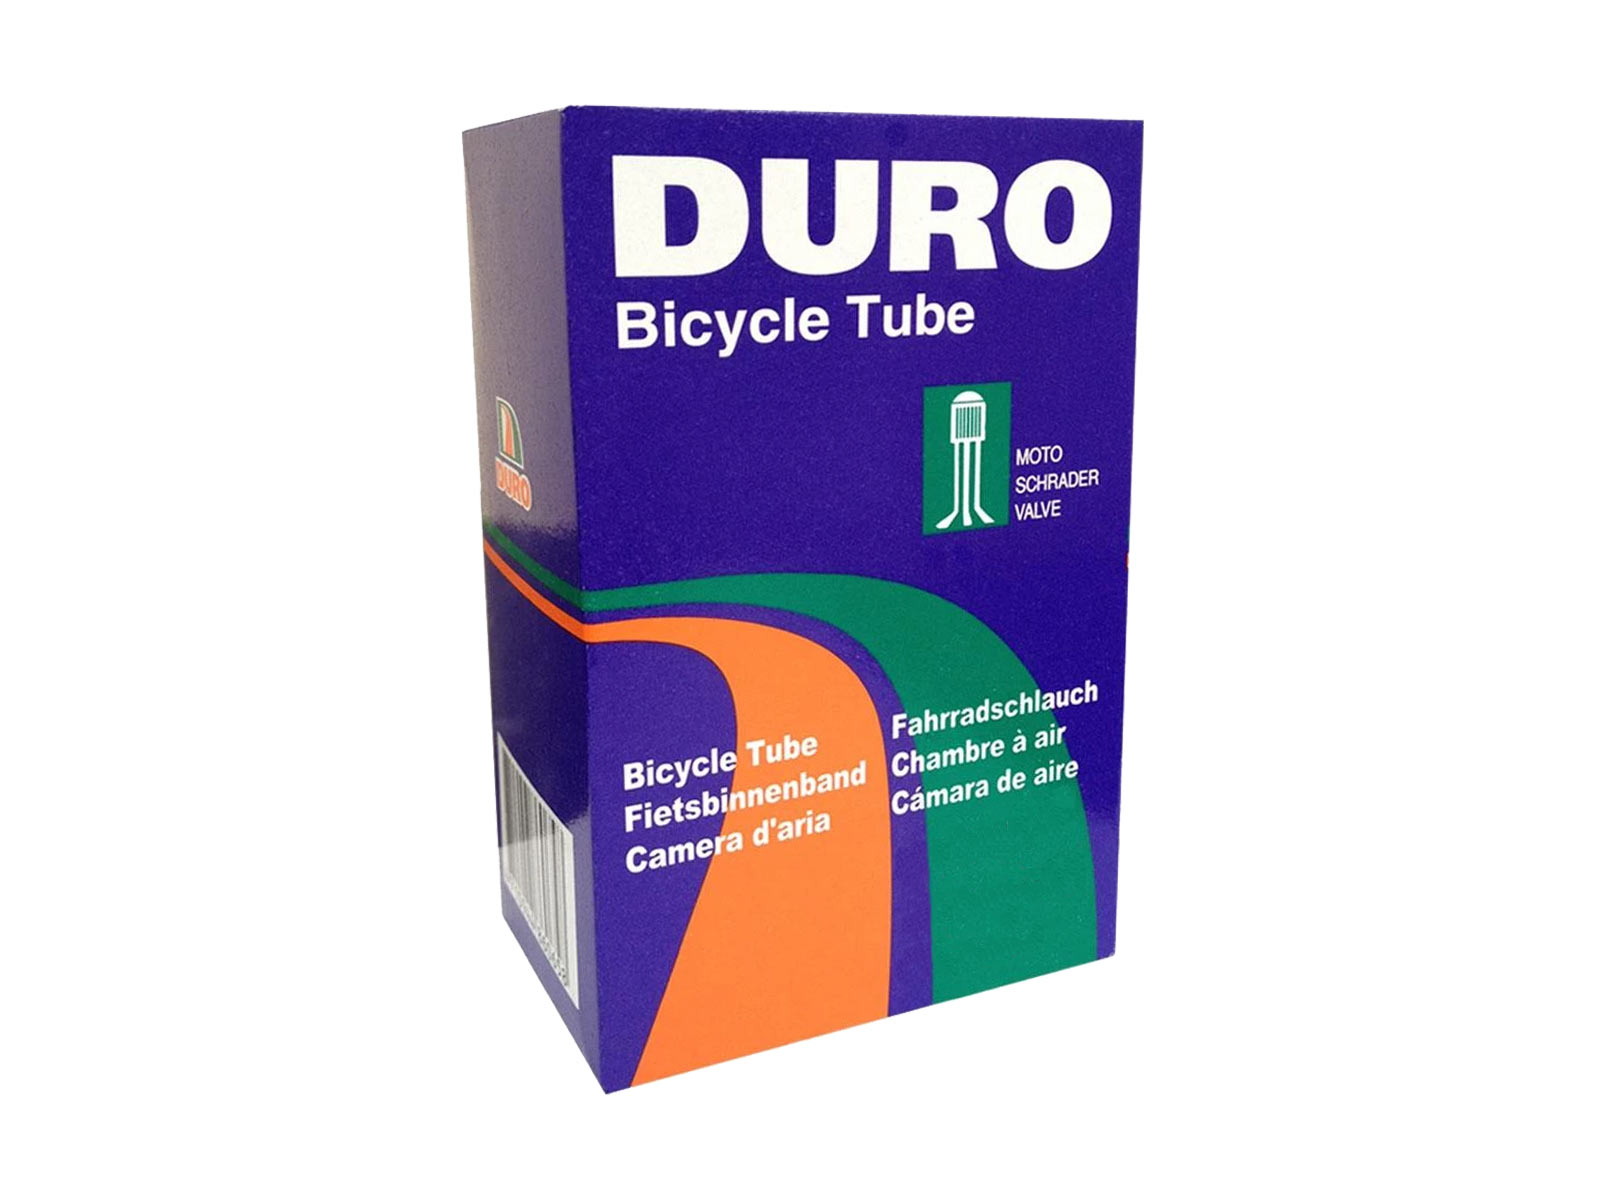 Duro Bicycle Tube Flash Sales, 54% OFF | www.ingeniovirtual.com